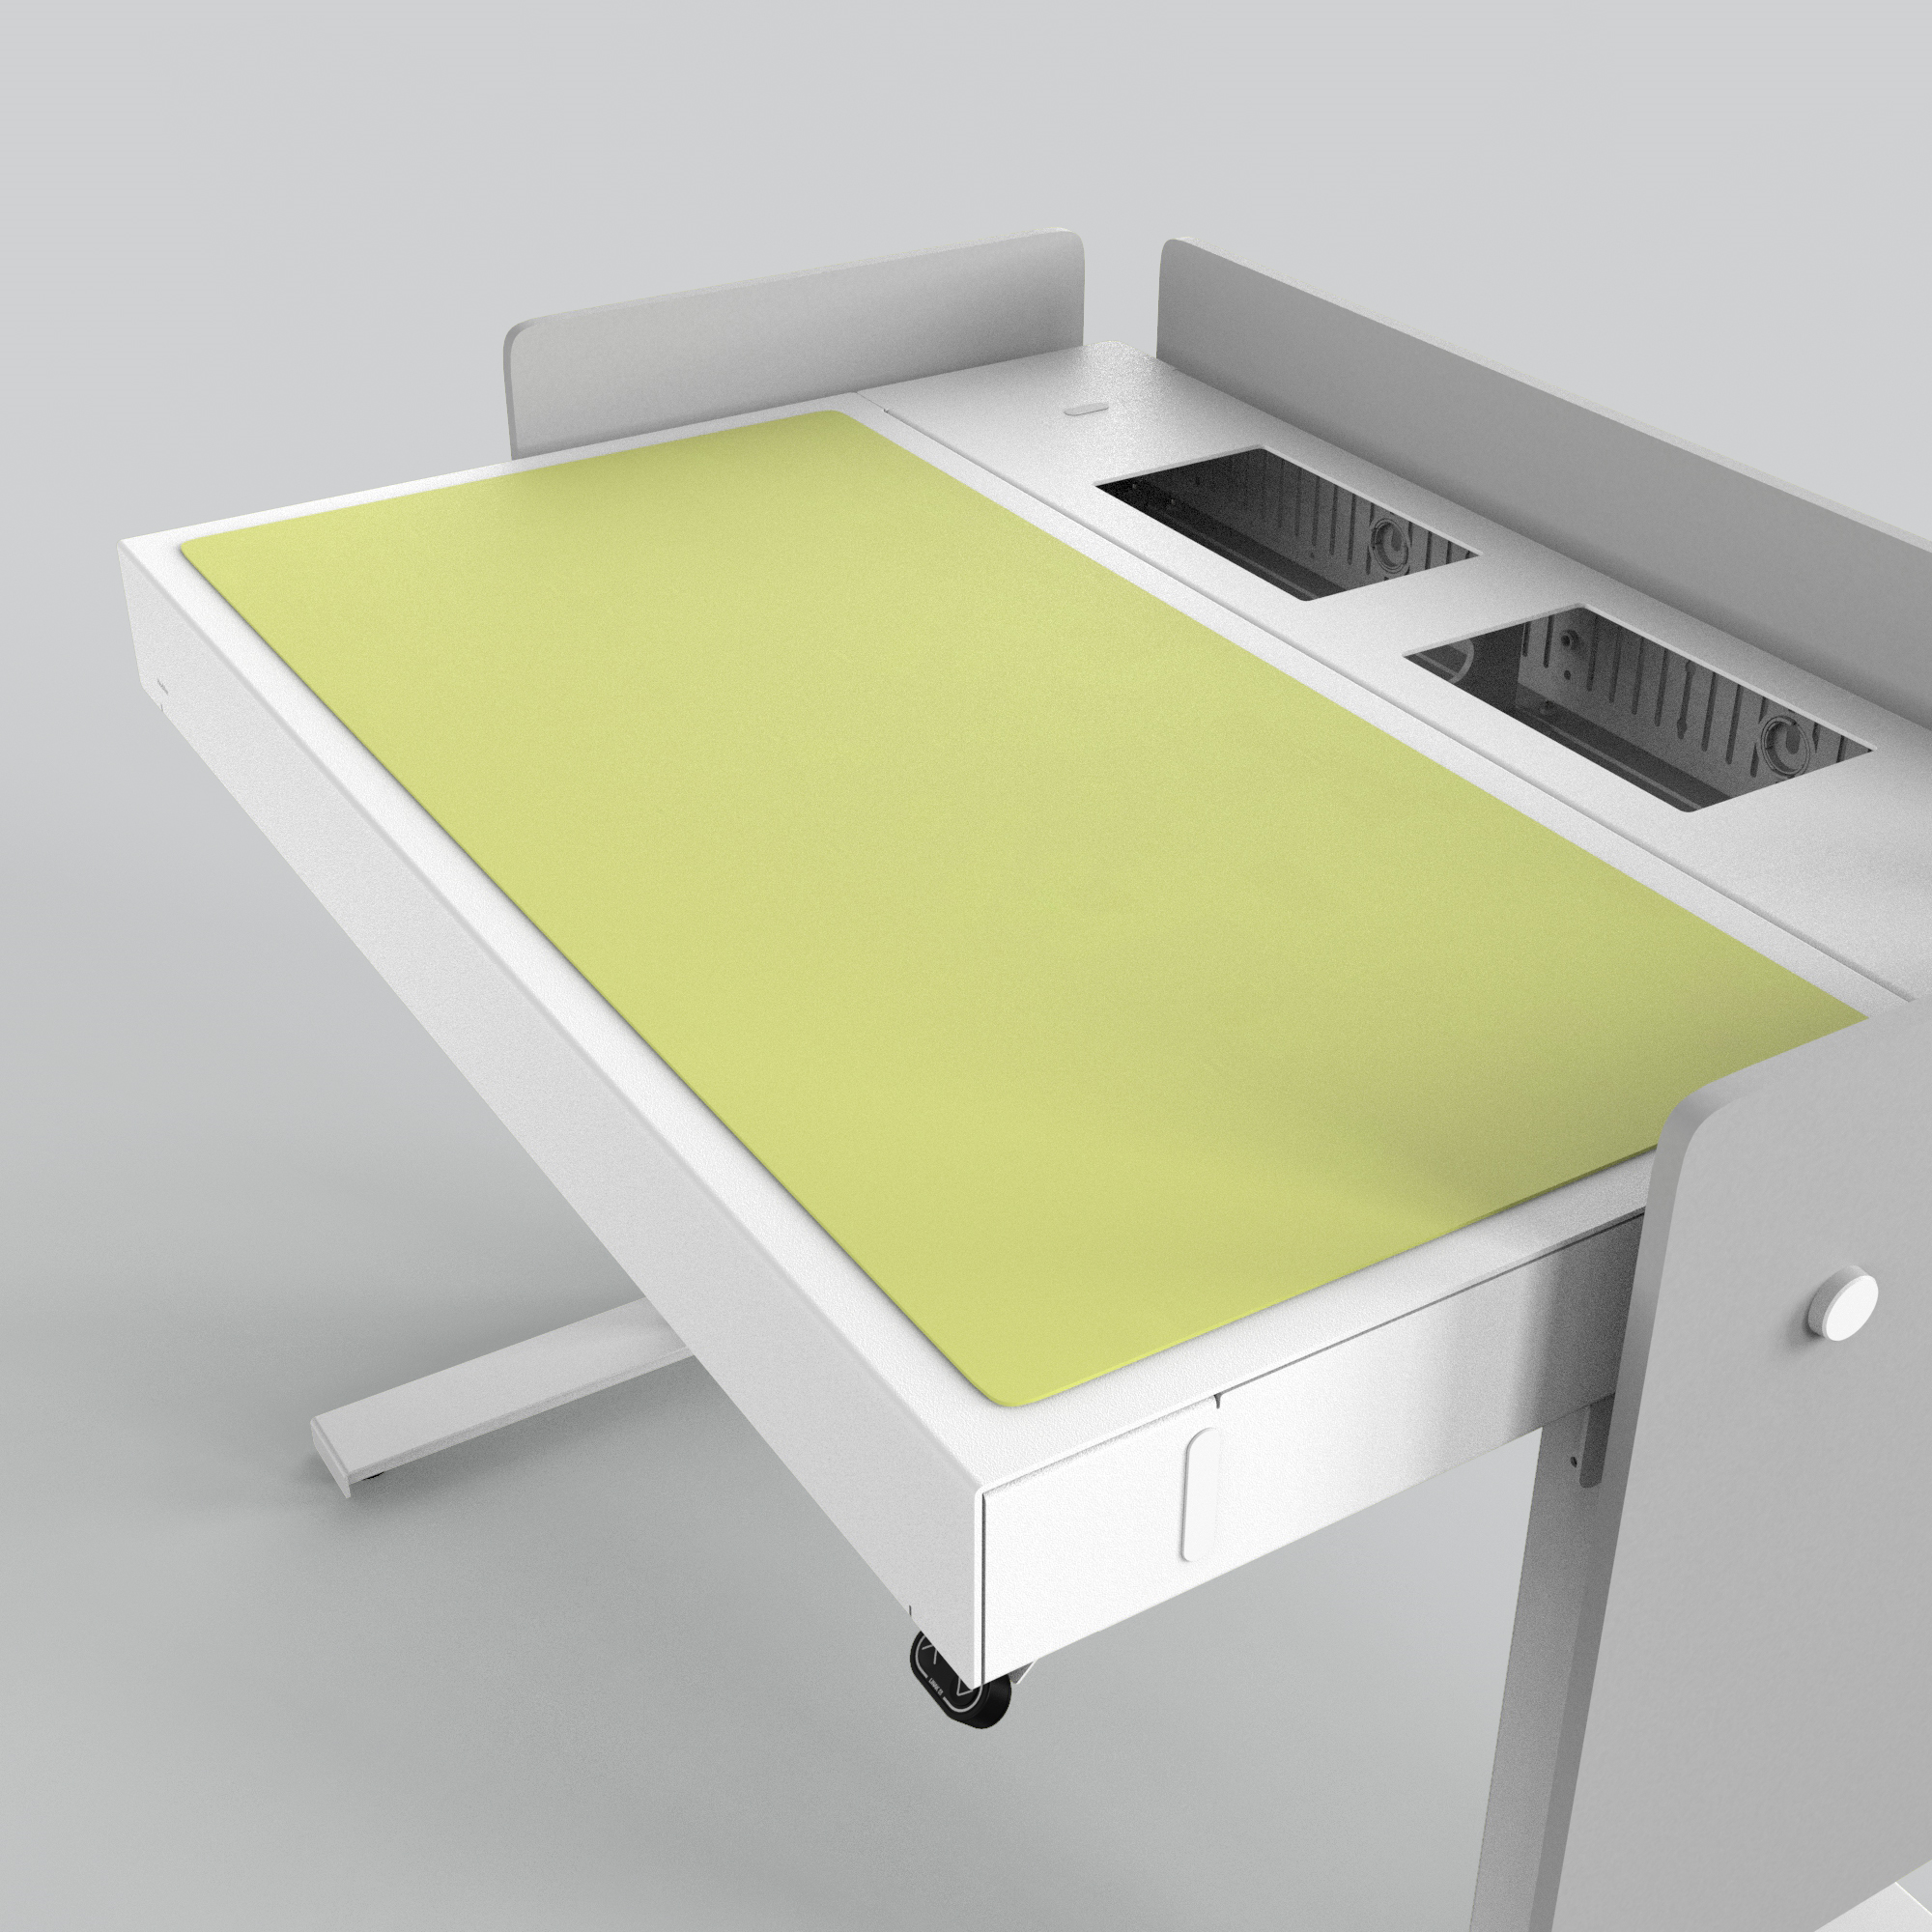 H922-4182 4U Deskpad - Spring Green